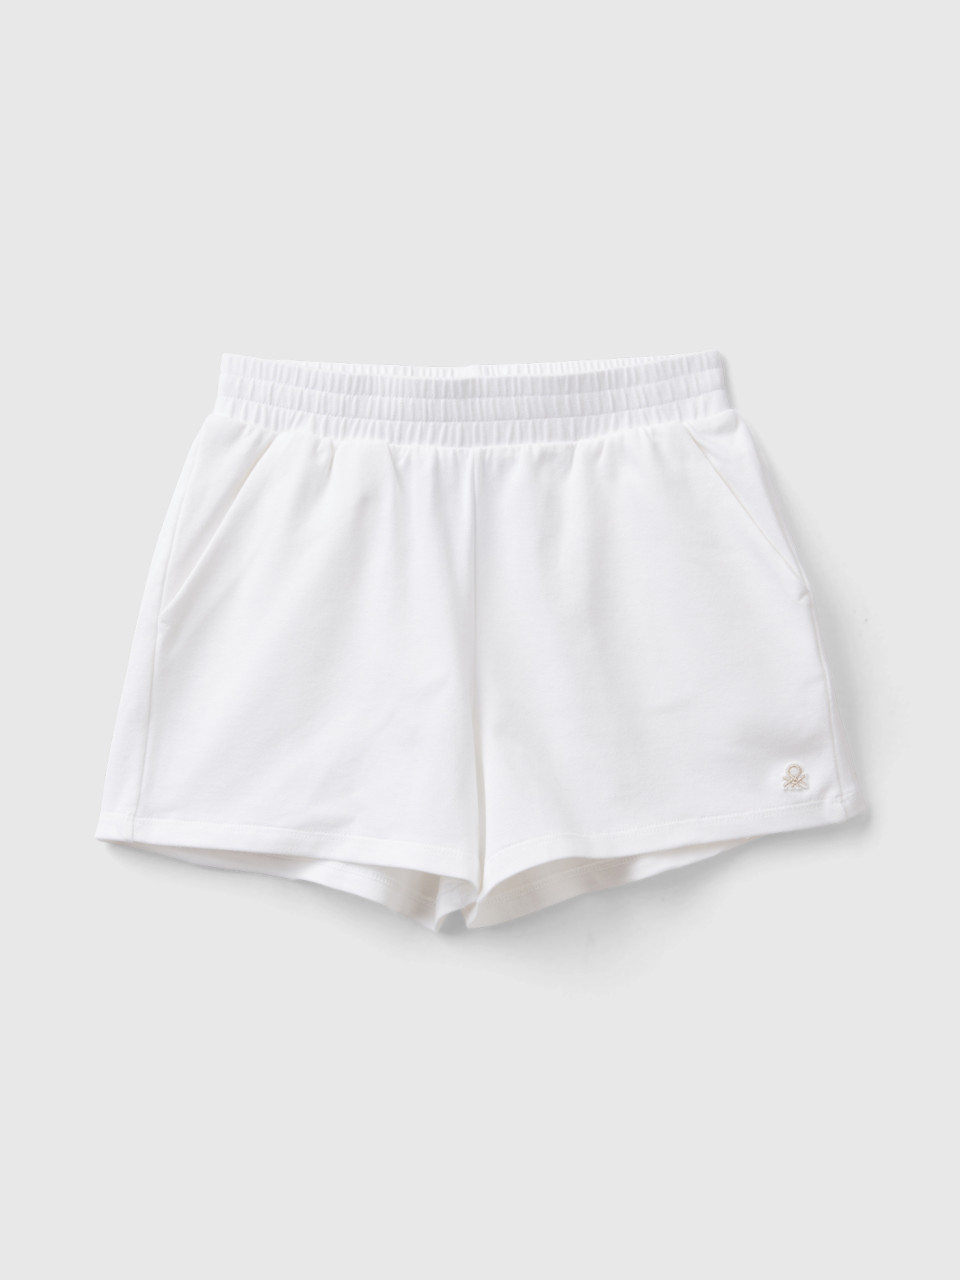 Benetton, Stretch Organic Cotton Shorts, White, Kids